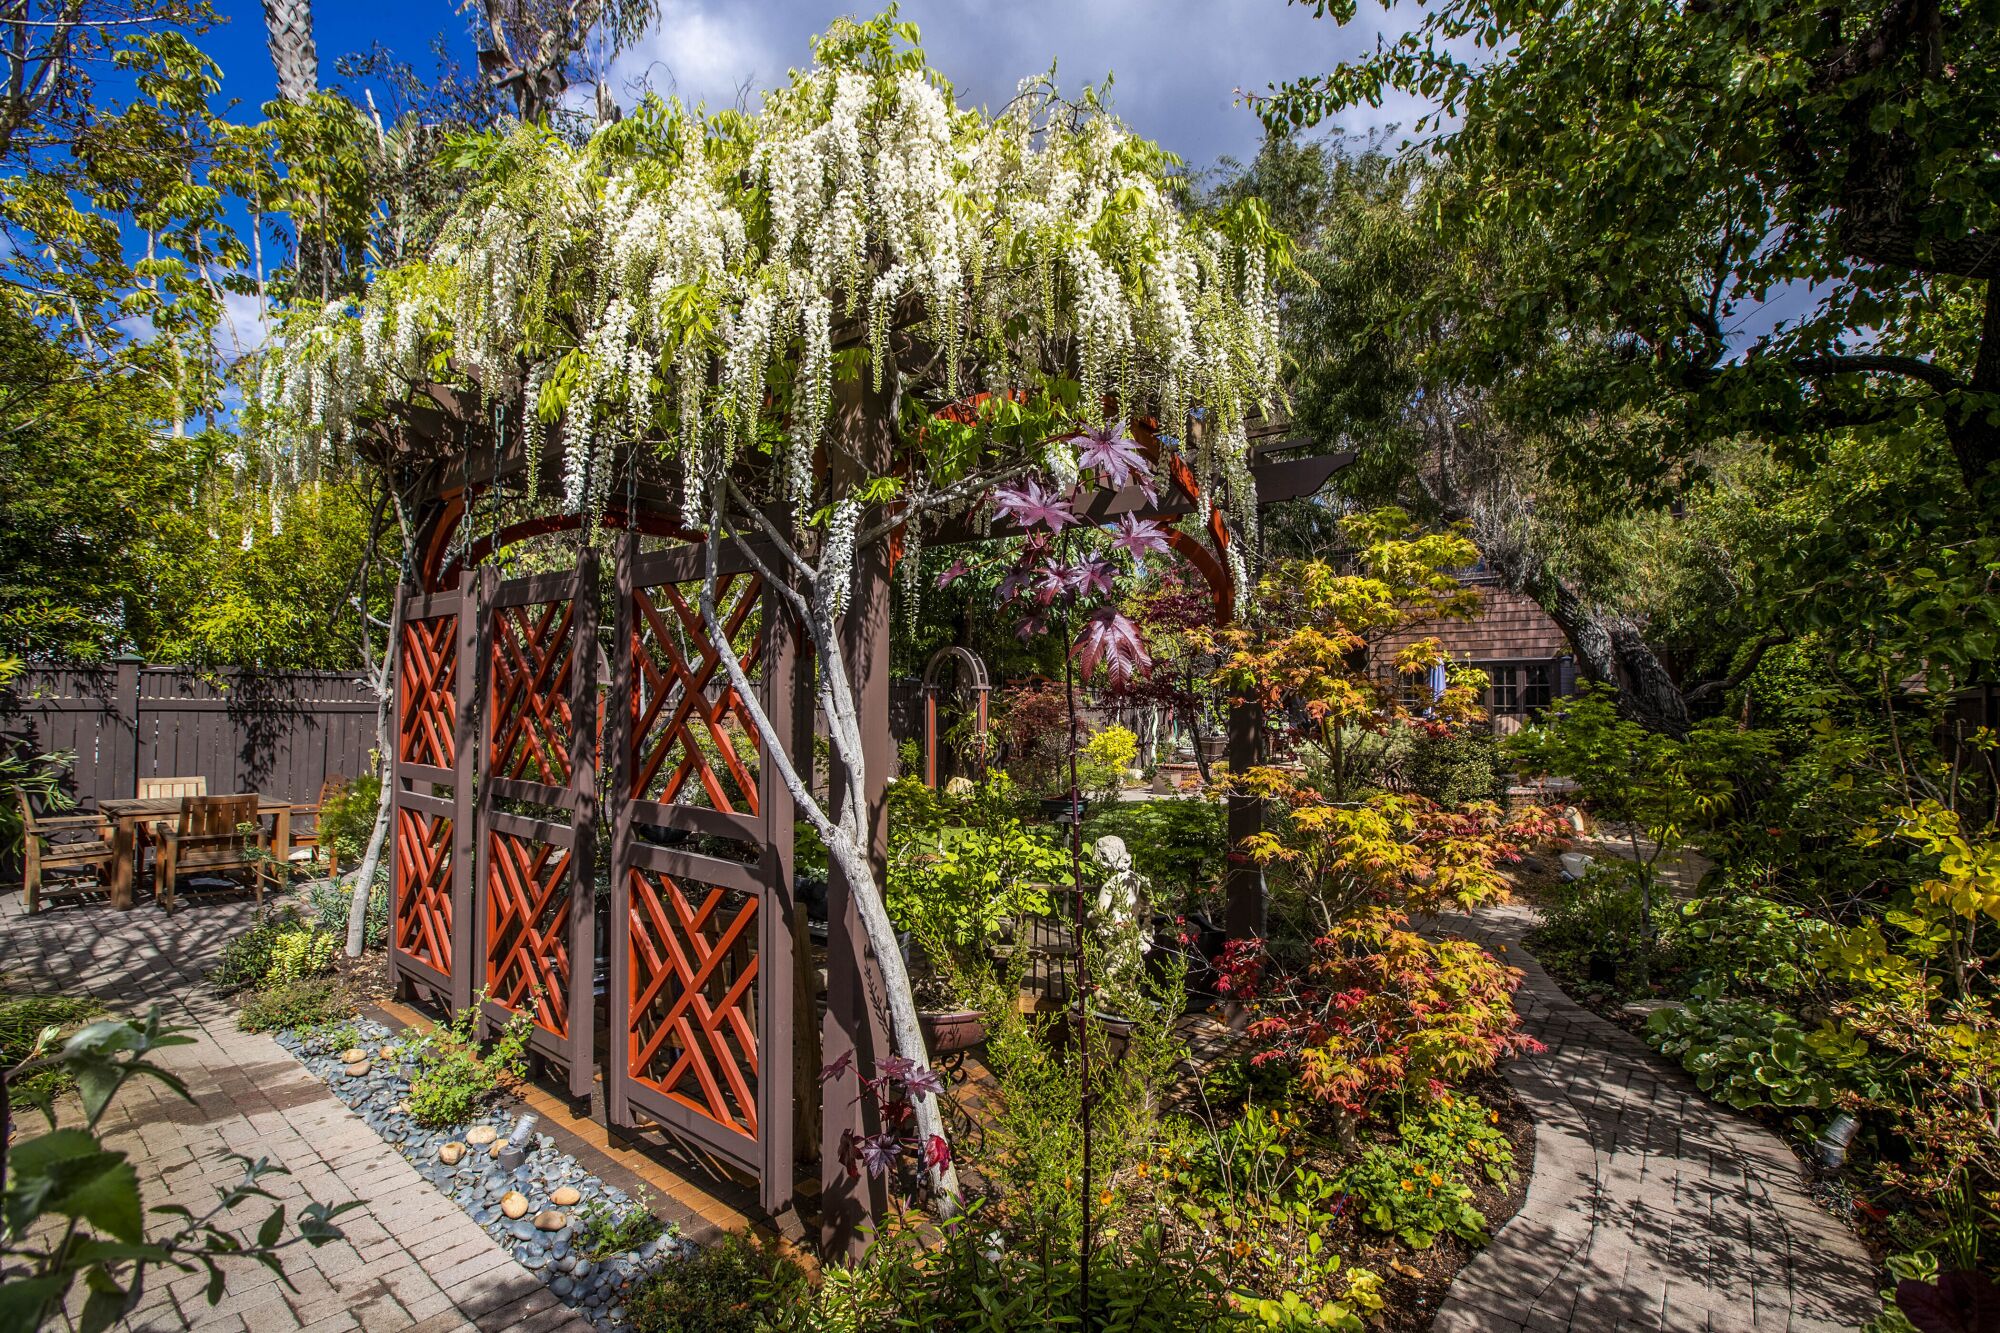 A view of a pergola covered in wisteria, in a backyard garden.